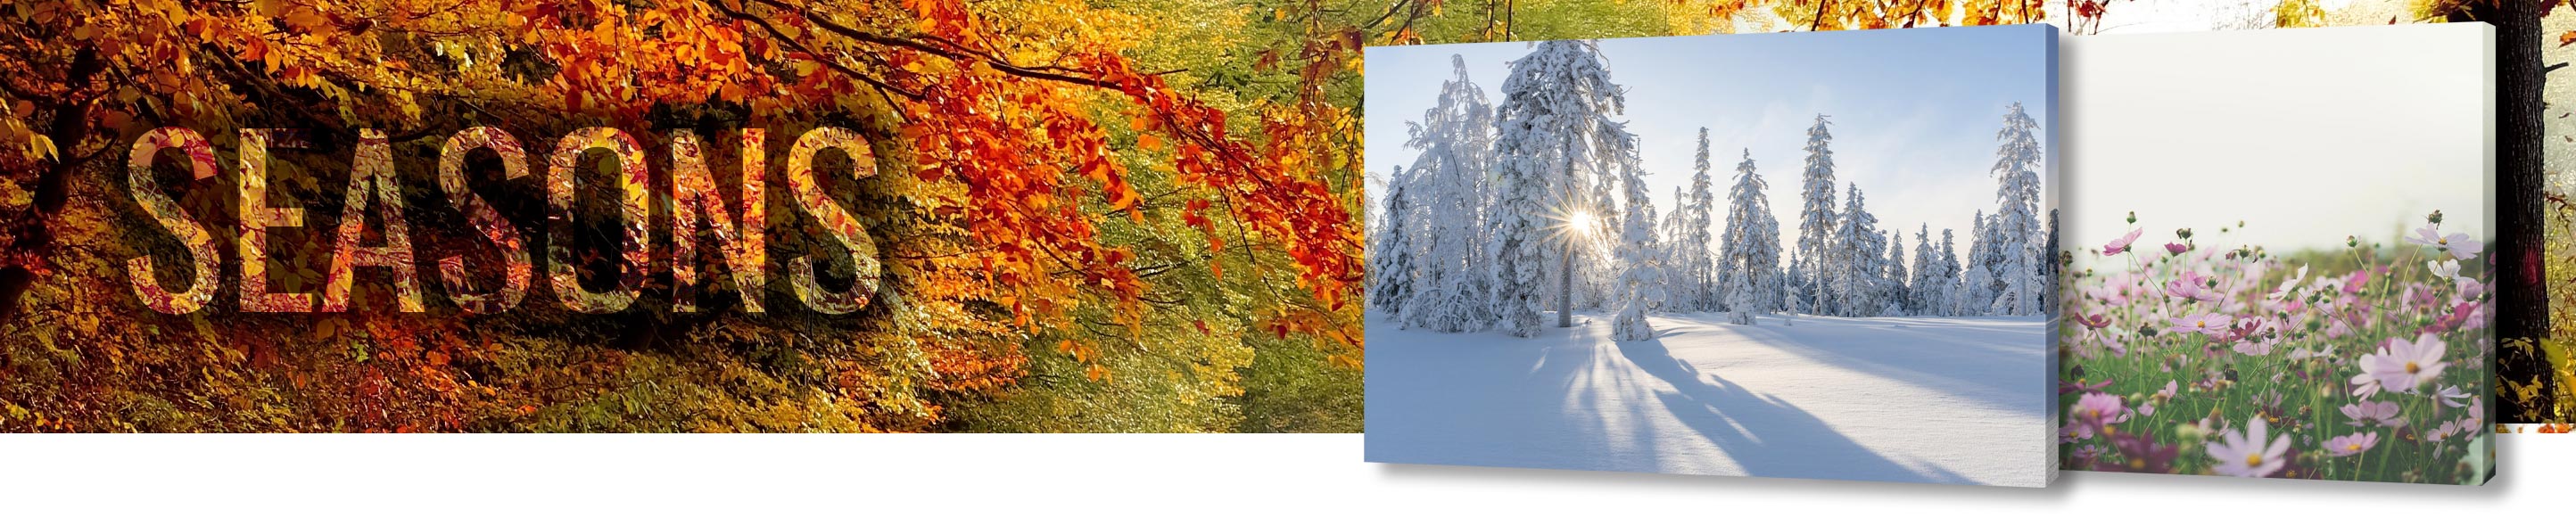 large-canvas-wrap-banner-seasons